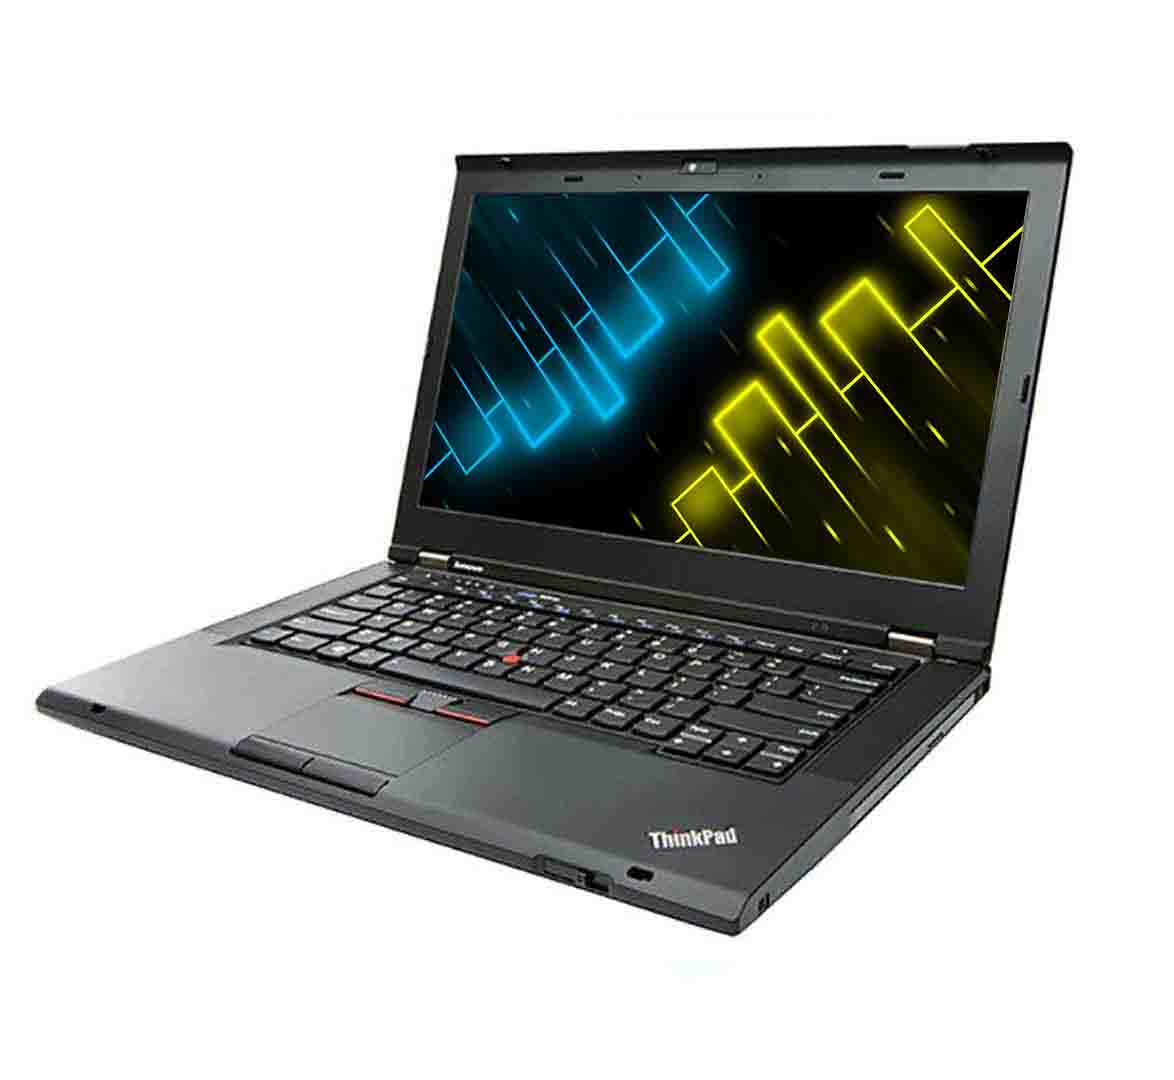 Lenovo ThinkPad T430 Business Laptop, Intel Core i5-3rd Gen CPU